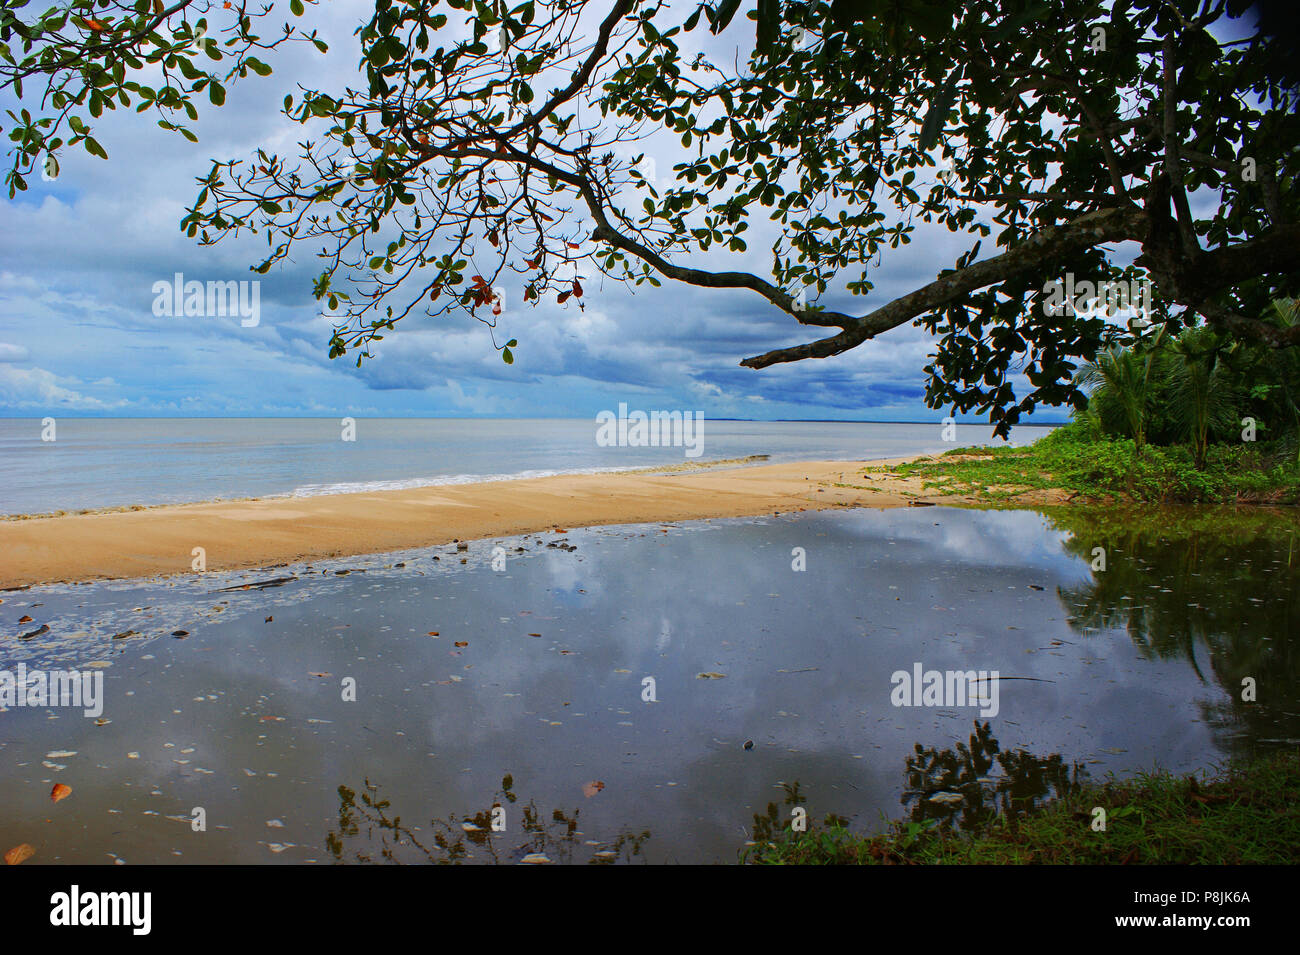 Pantai Tanah Hitam Beach, Sambas, West Kalimantan, Indonesia Stock Photo